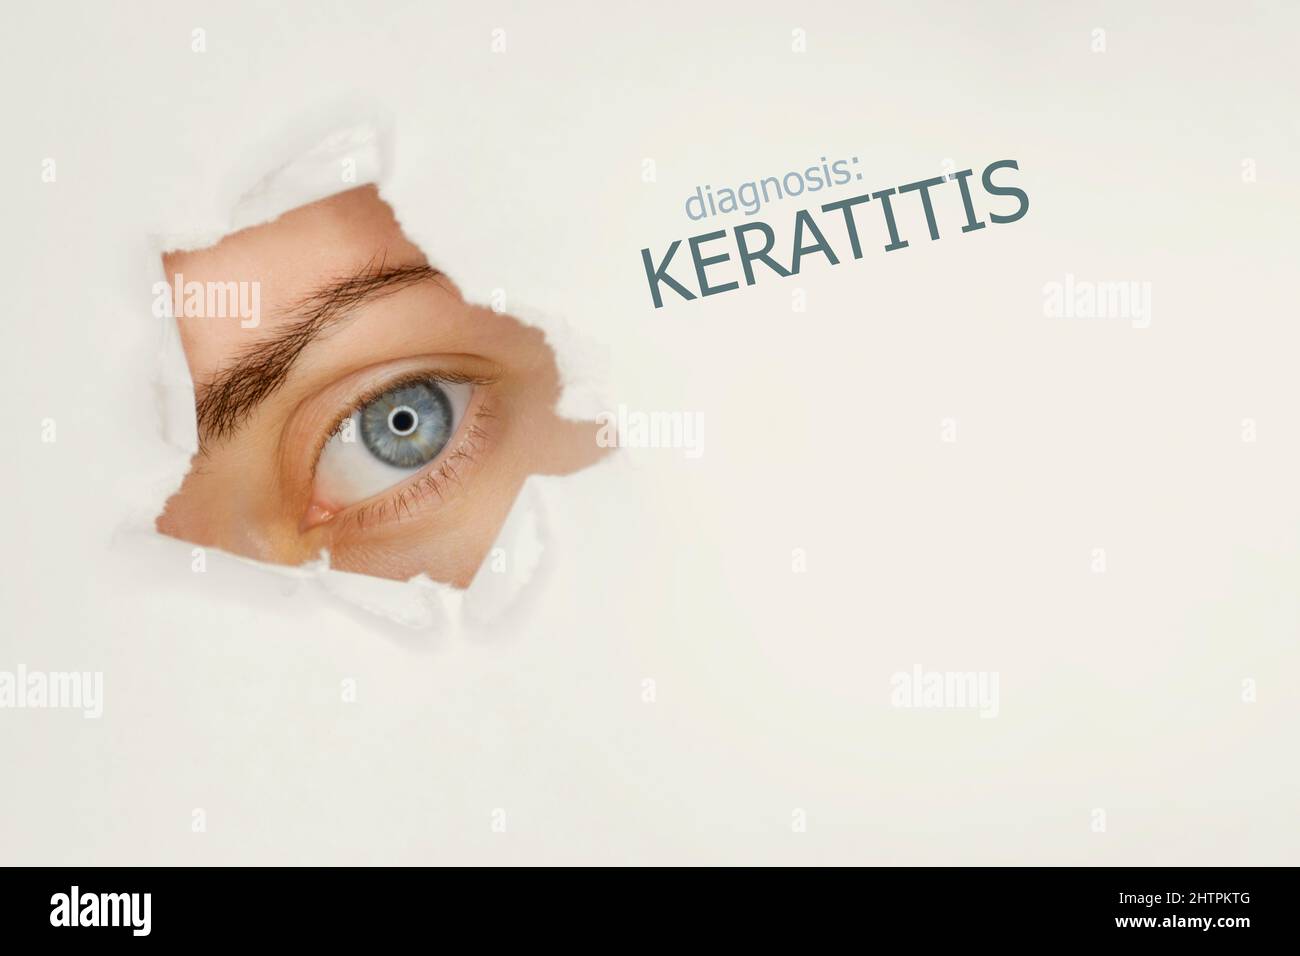 Keratitis disease poster with eye test chart and blue eye. Studio grey background Stock Photo